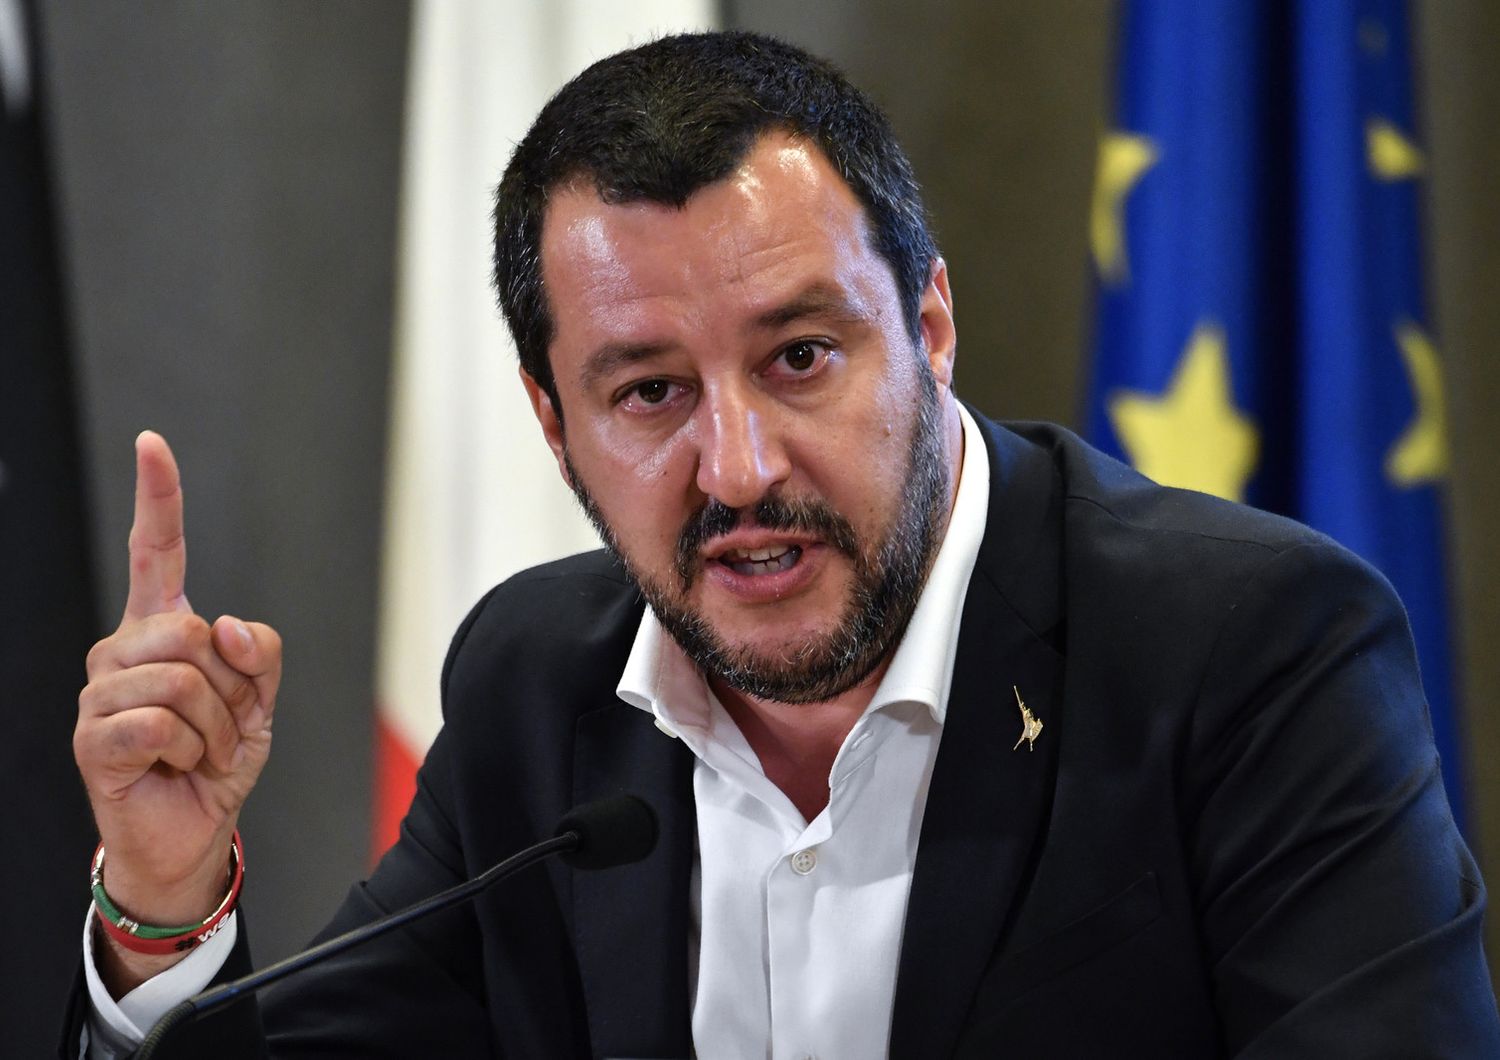 &nbsp; Matteo Salvini